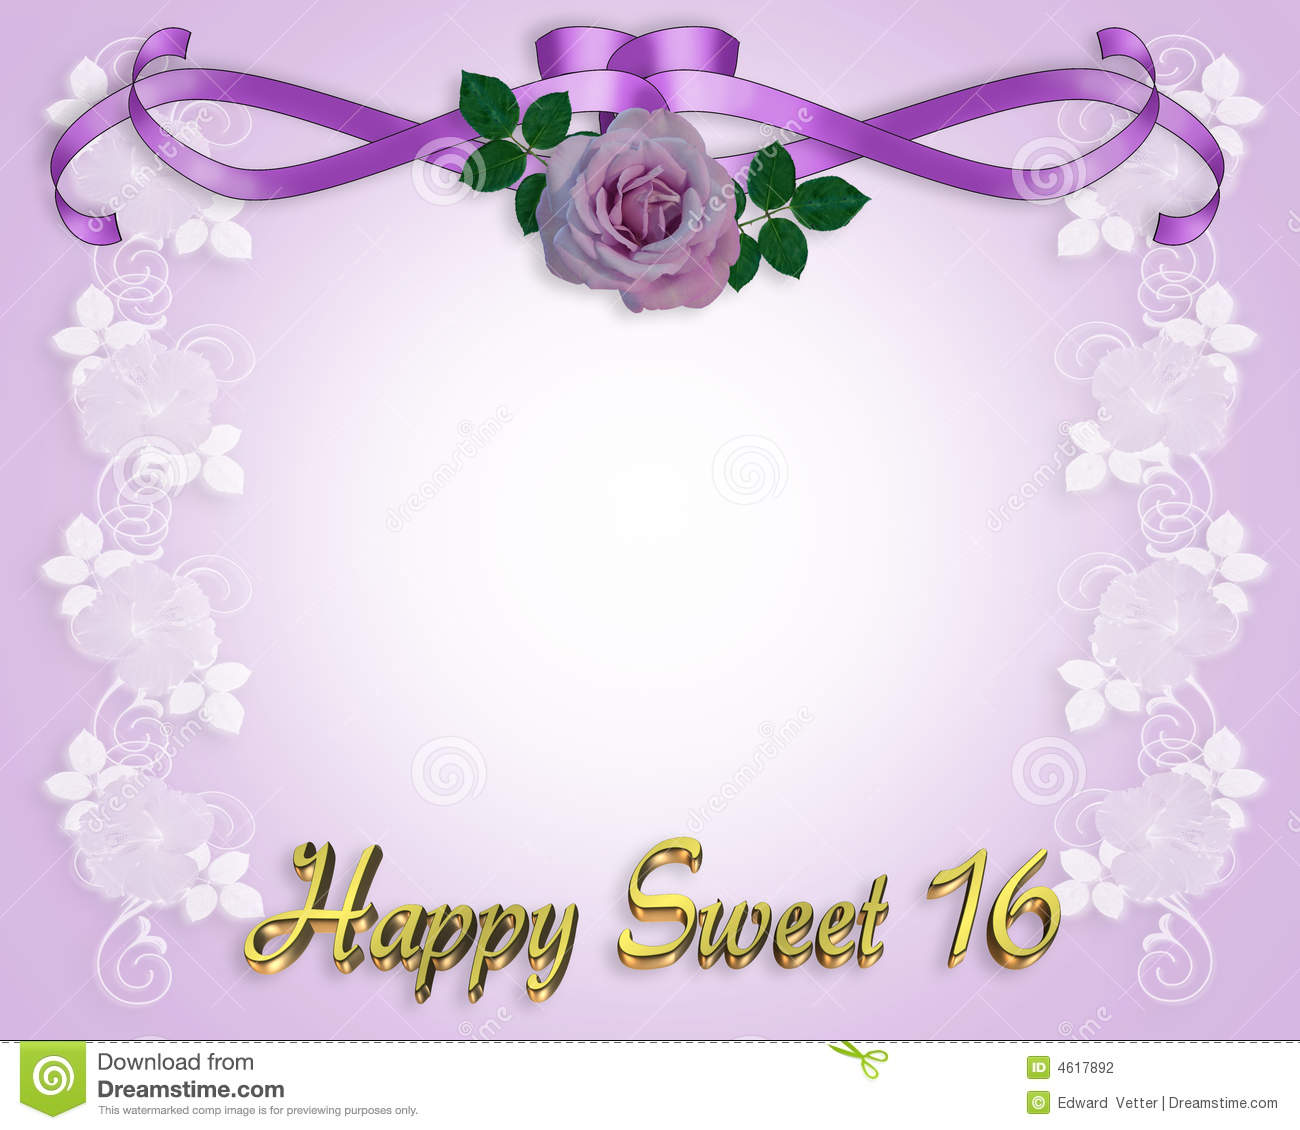 Sweet 16 Birthday Invitation Card Stock Photography   Image  4617892